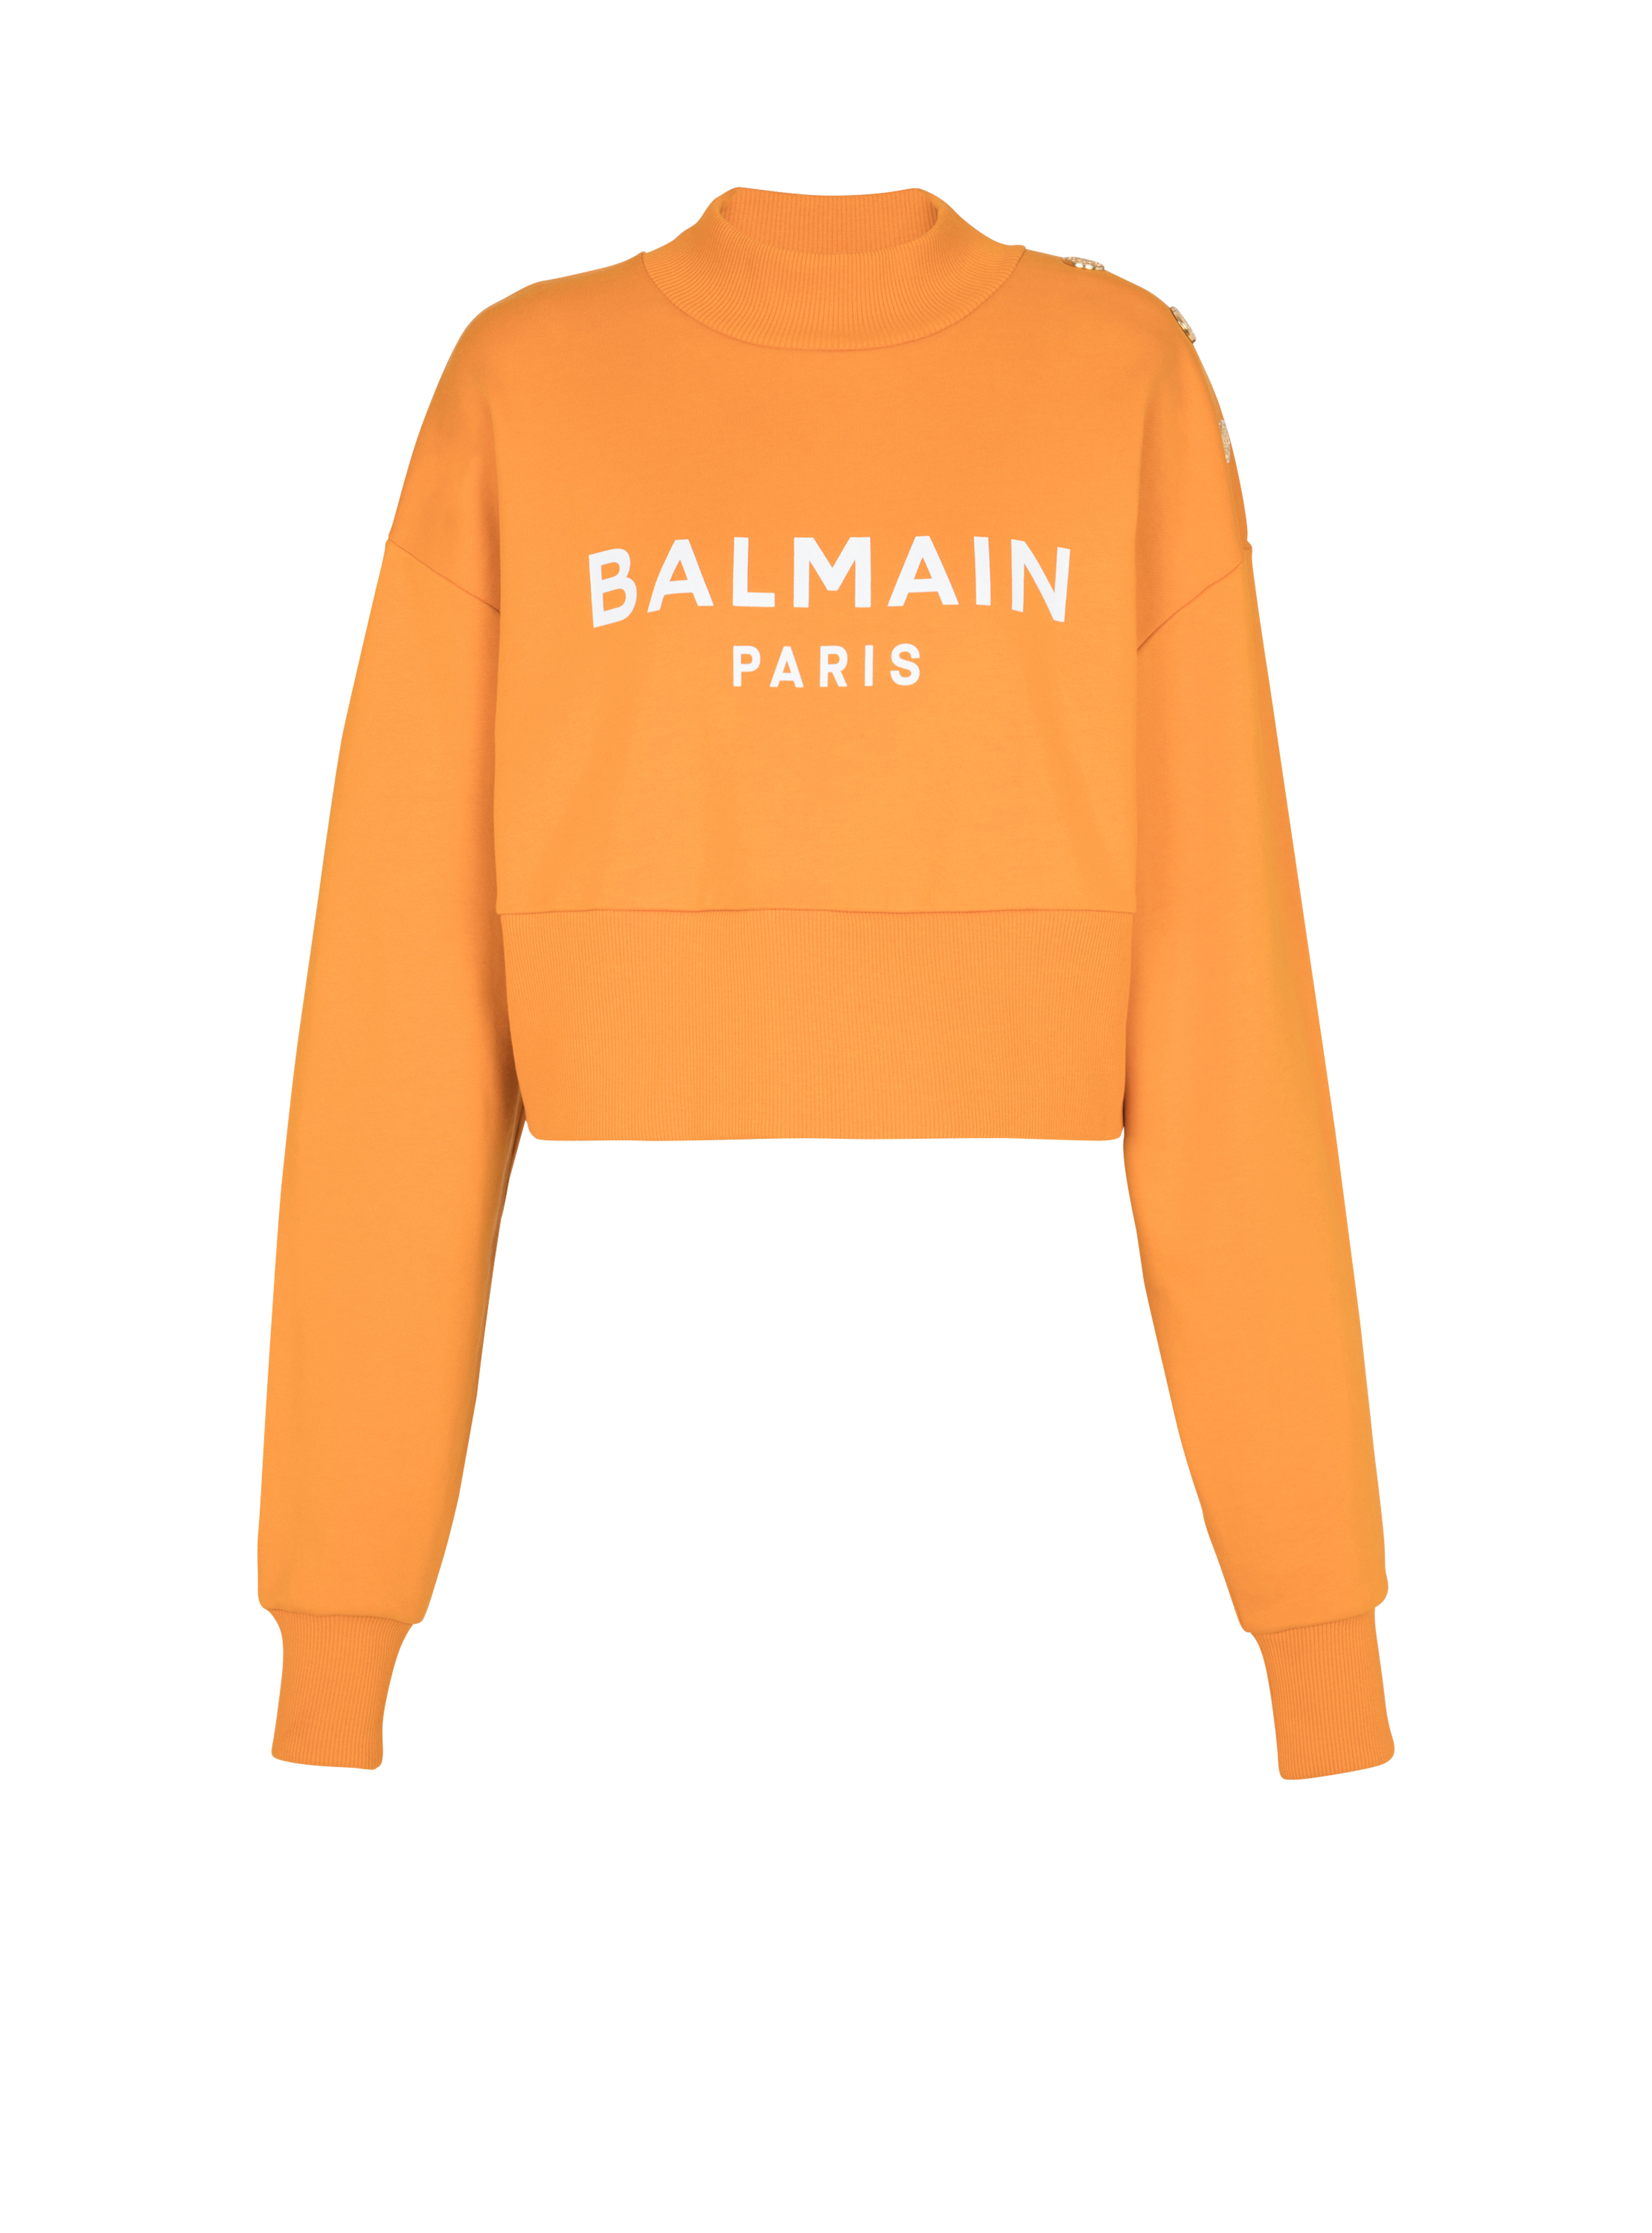 Balmain巴尔曼标志印花短款环保设计棉质运动衫, orange